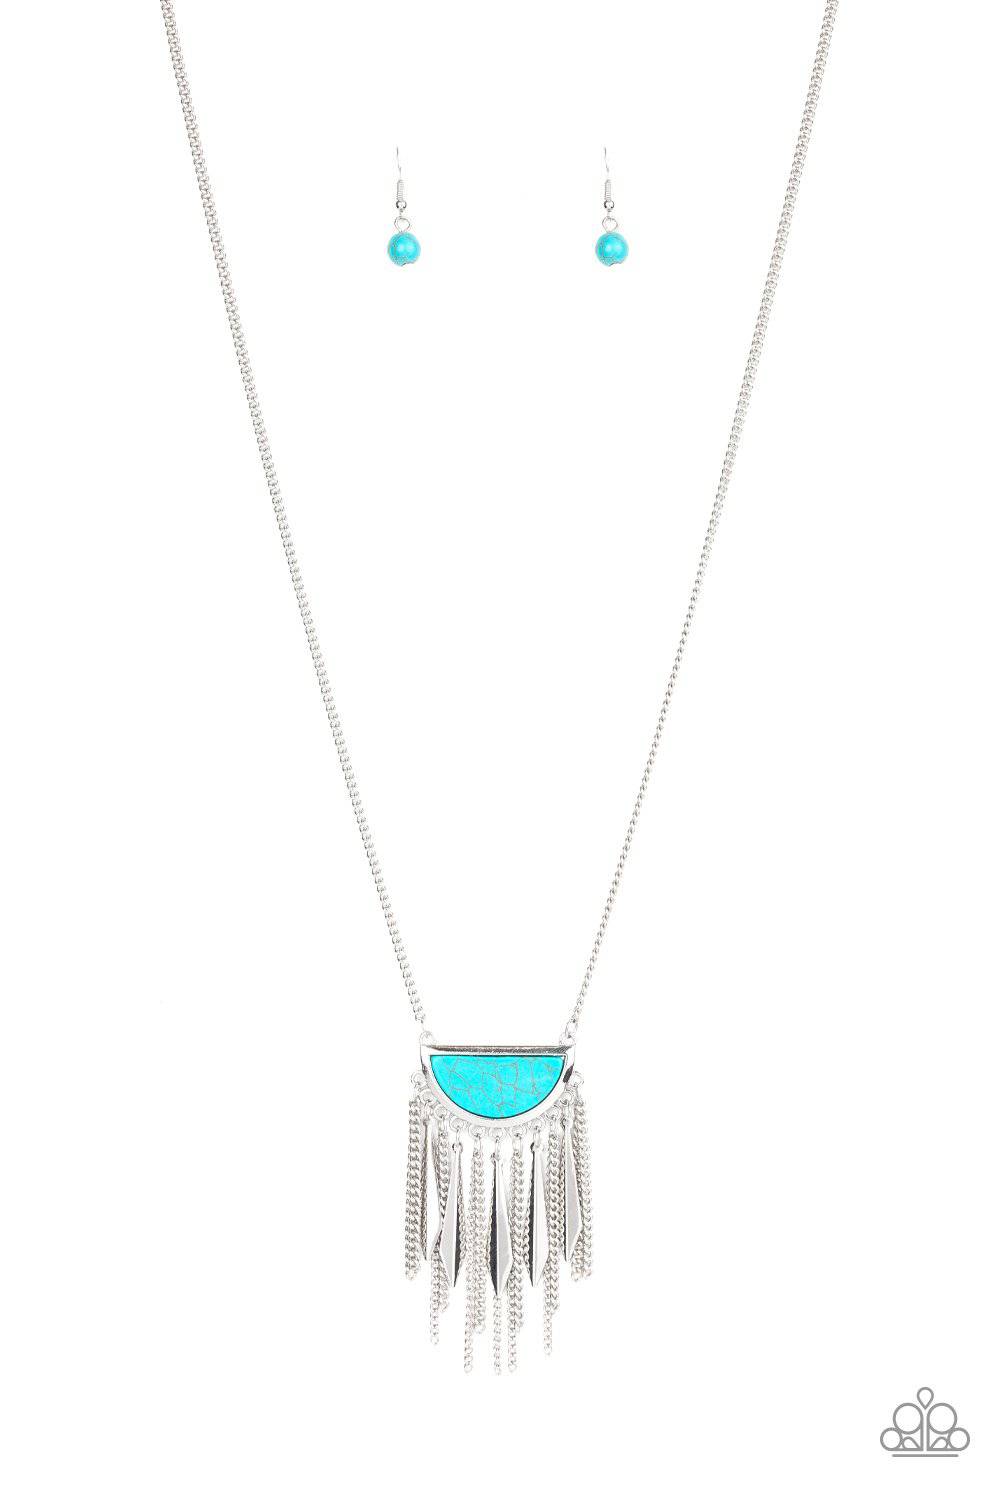 Desert Hustle -Turquoise Half Moon Pendant Necklace - Paparazzi Accessories - GlaMarous Titi Jewels